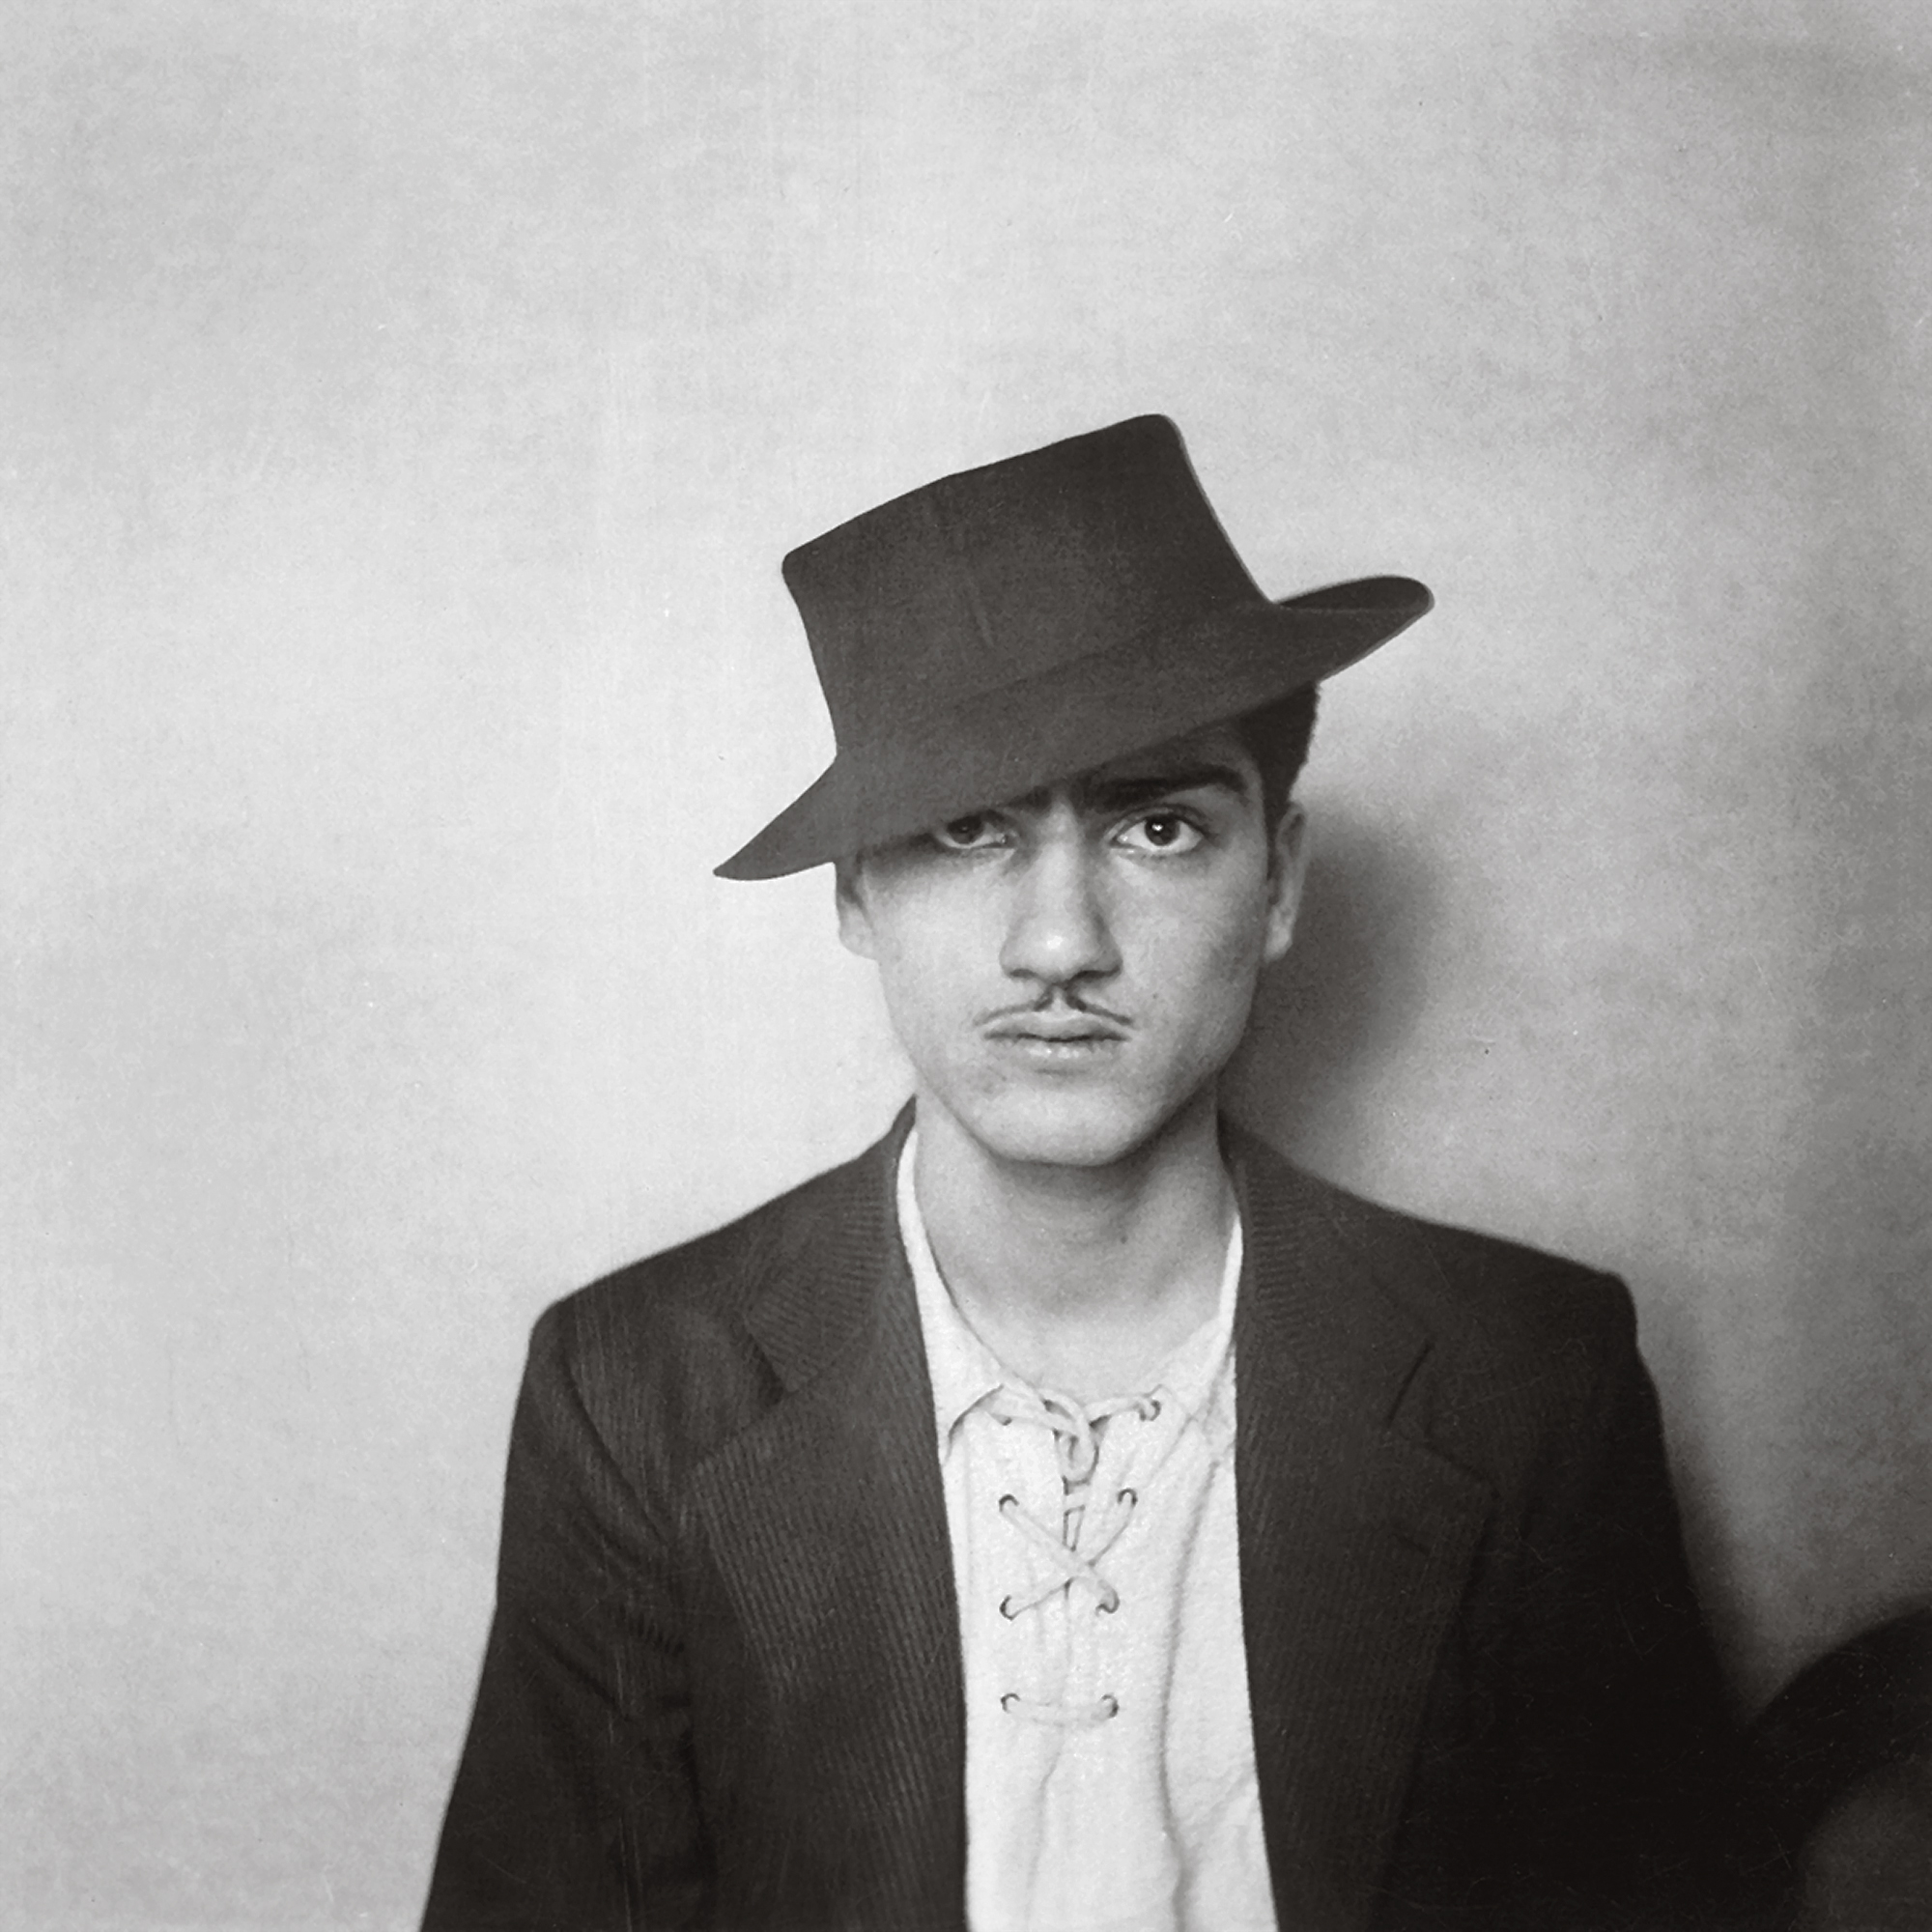 Van Leo, Self-Portraits, Cairo, August 25, 1939